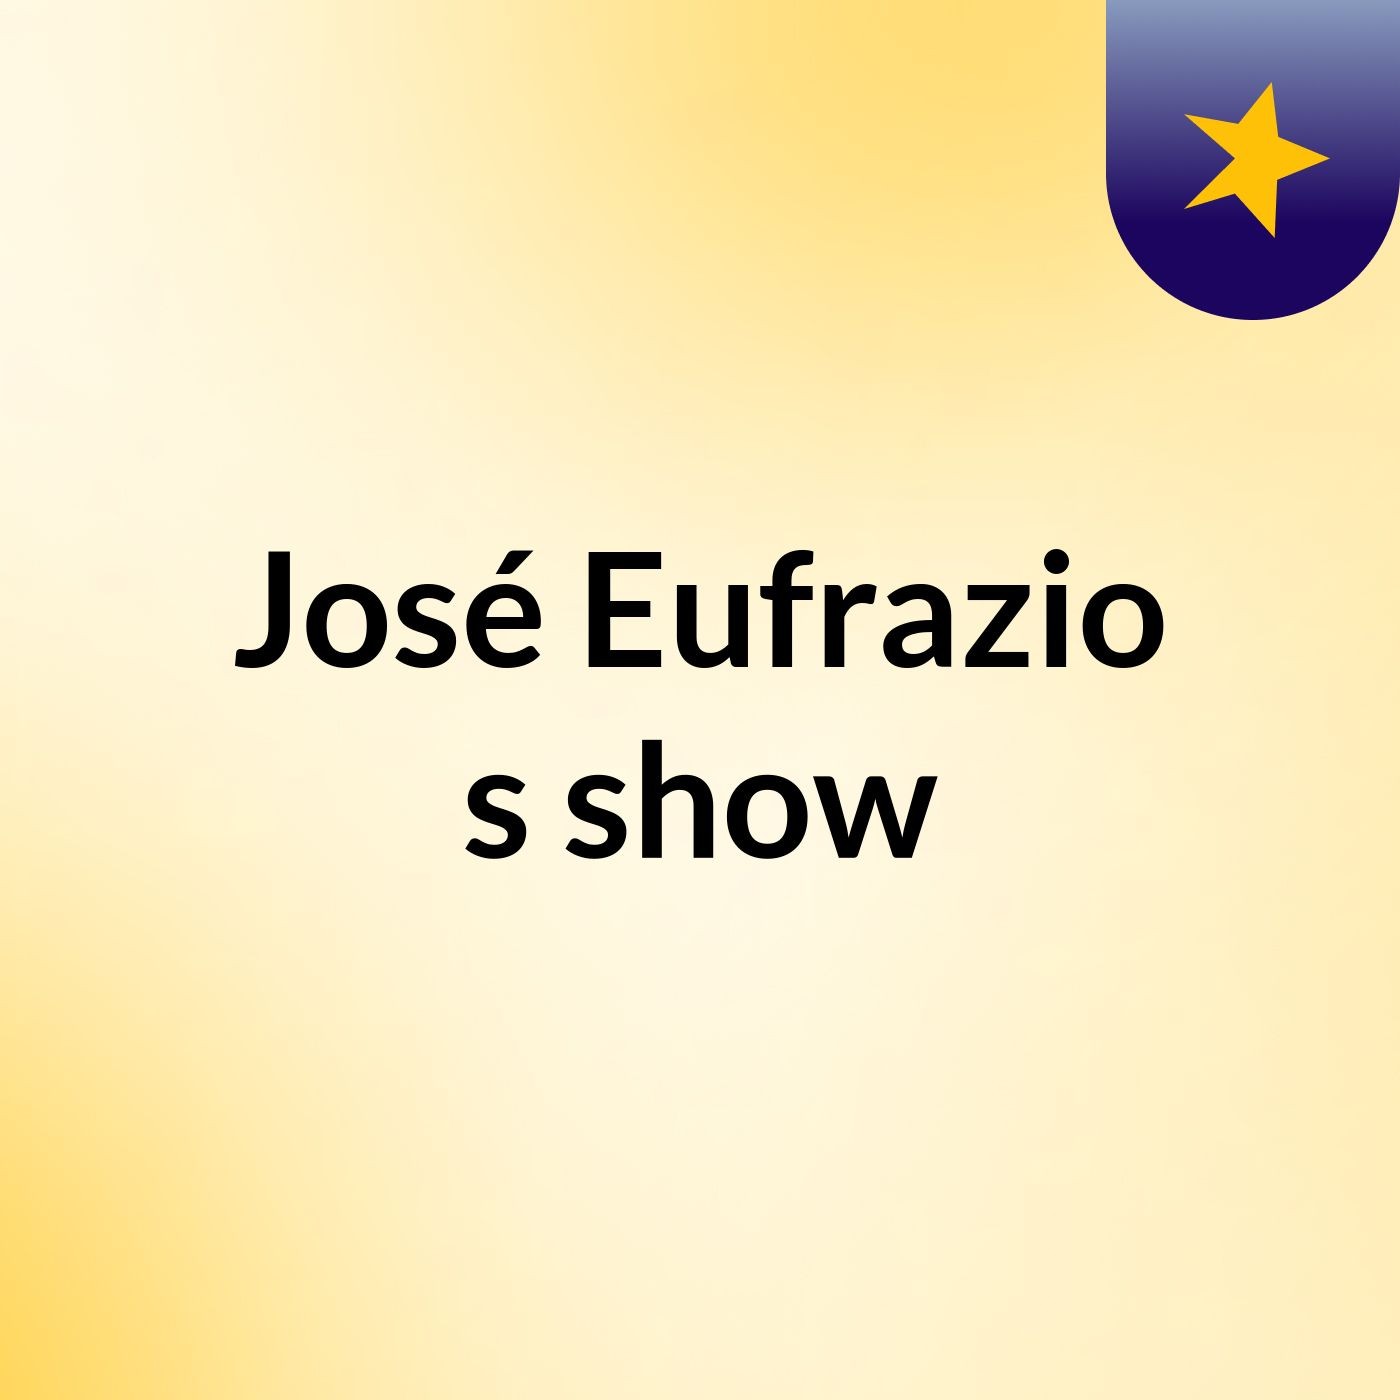 José Eufrazio's show